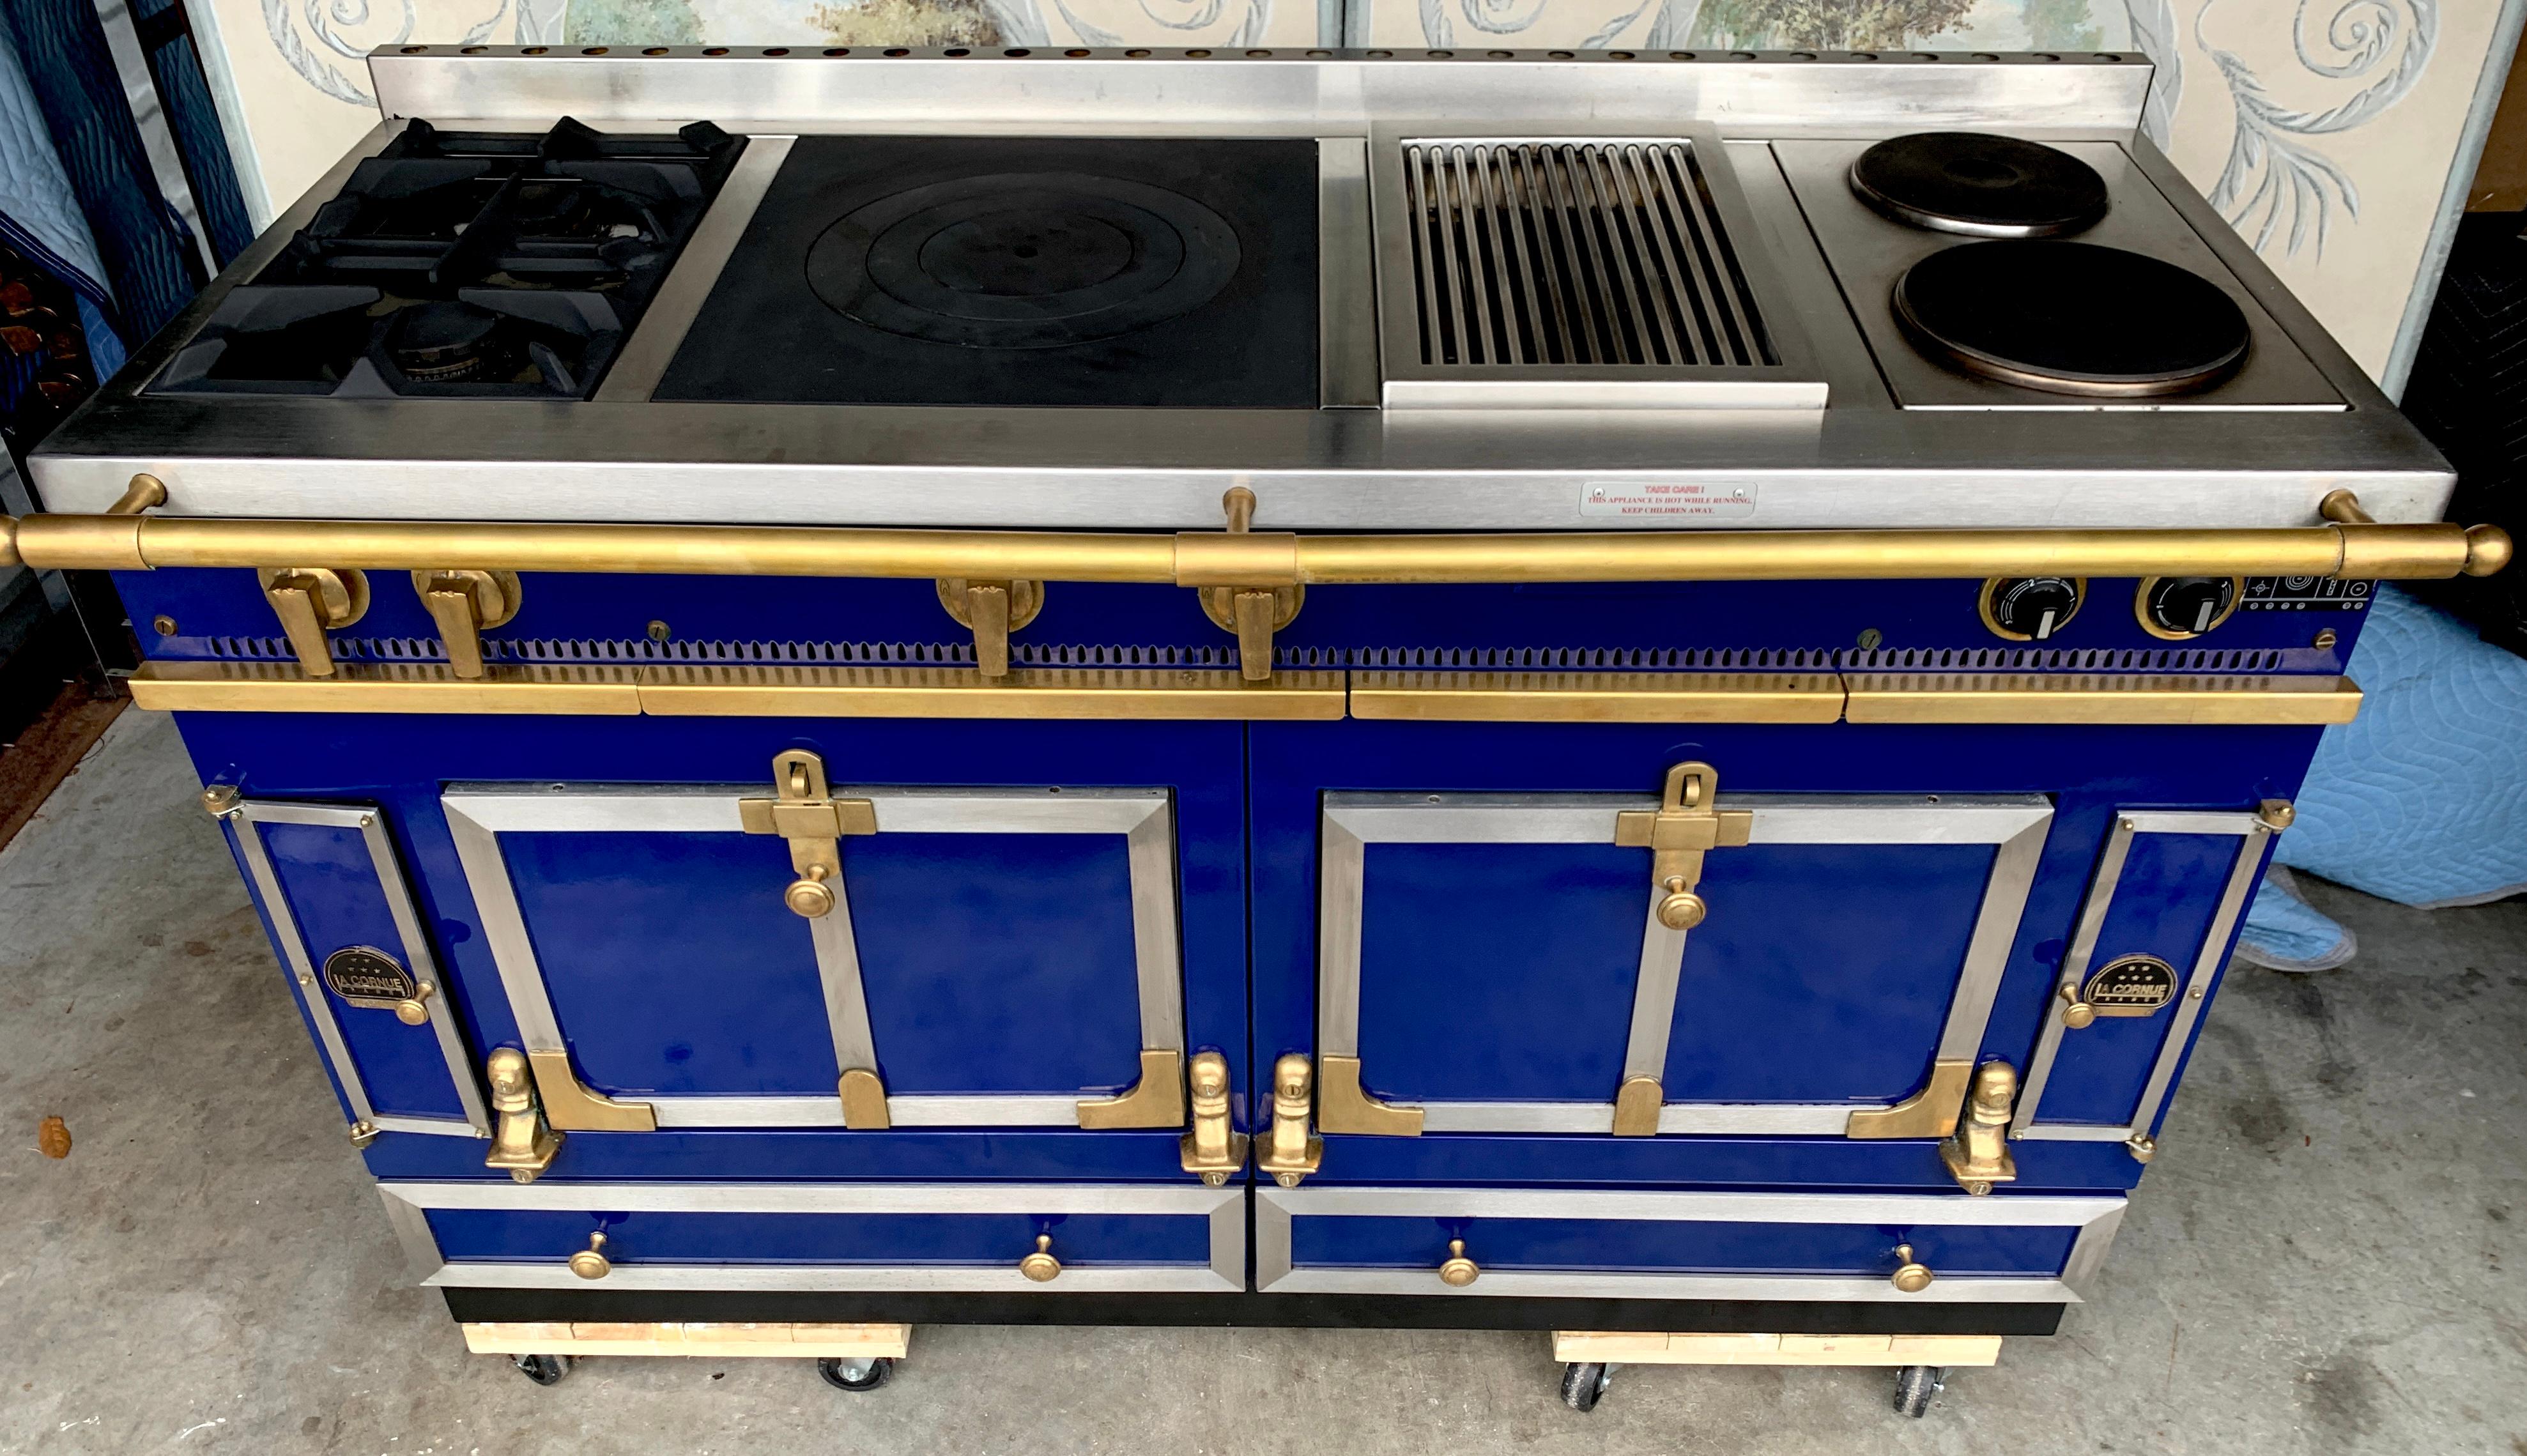 cobalt blue stove